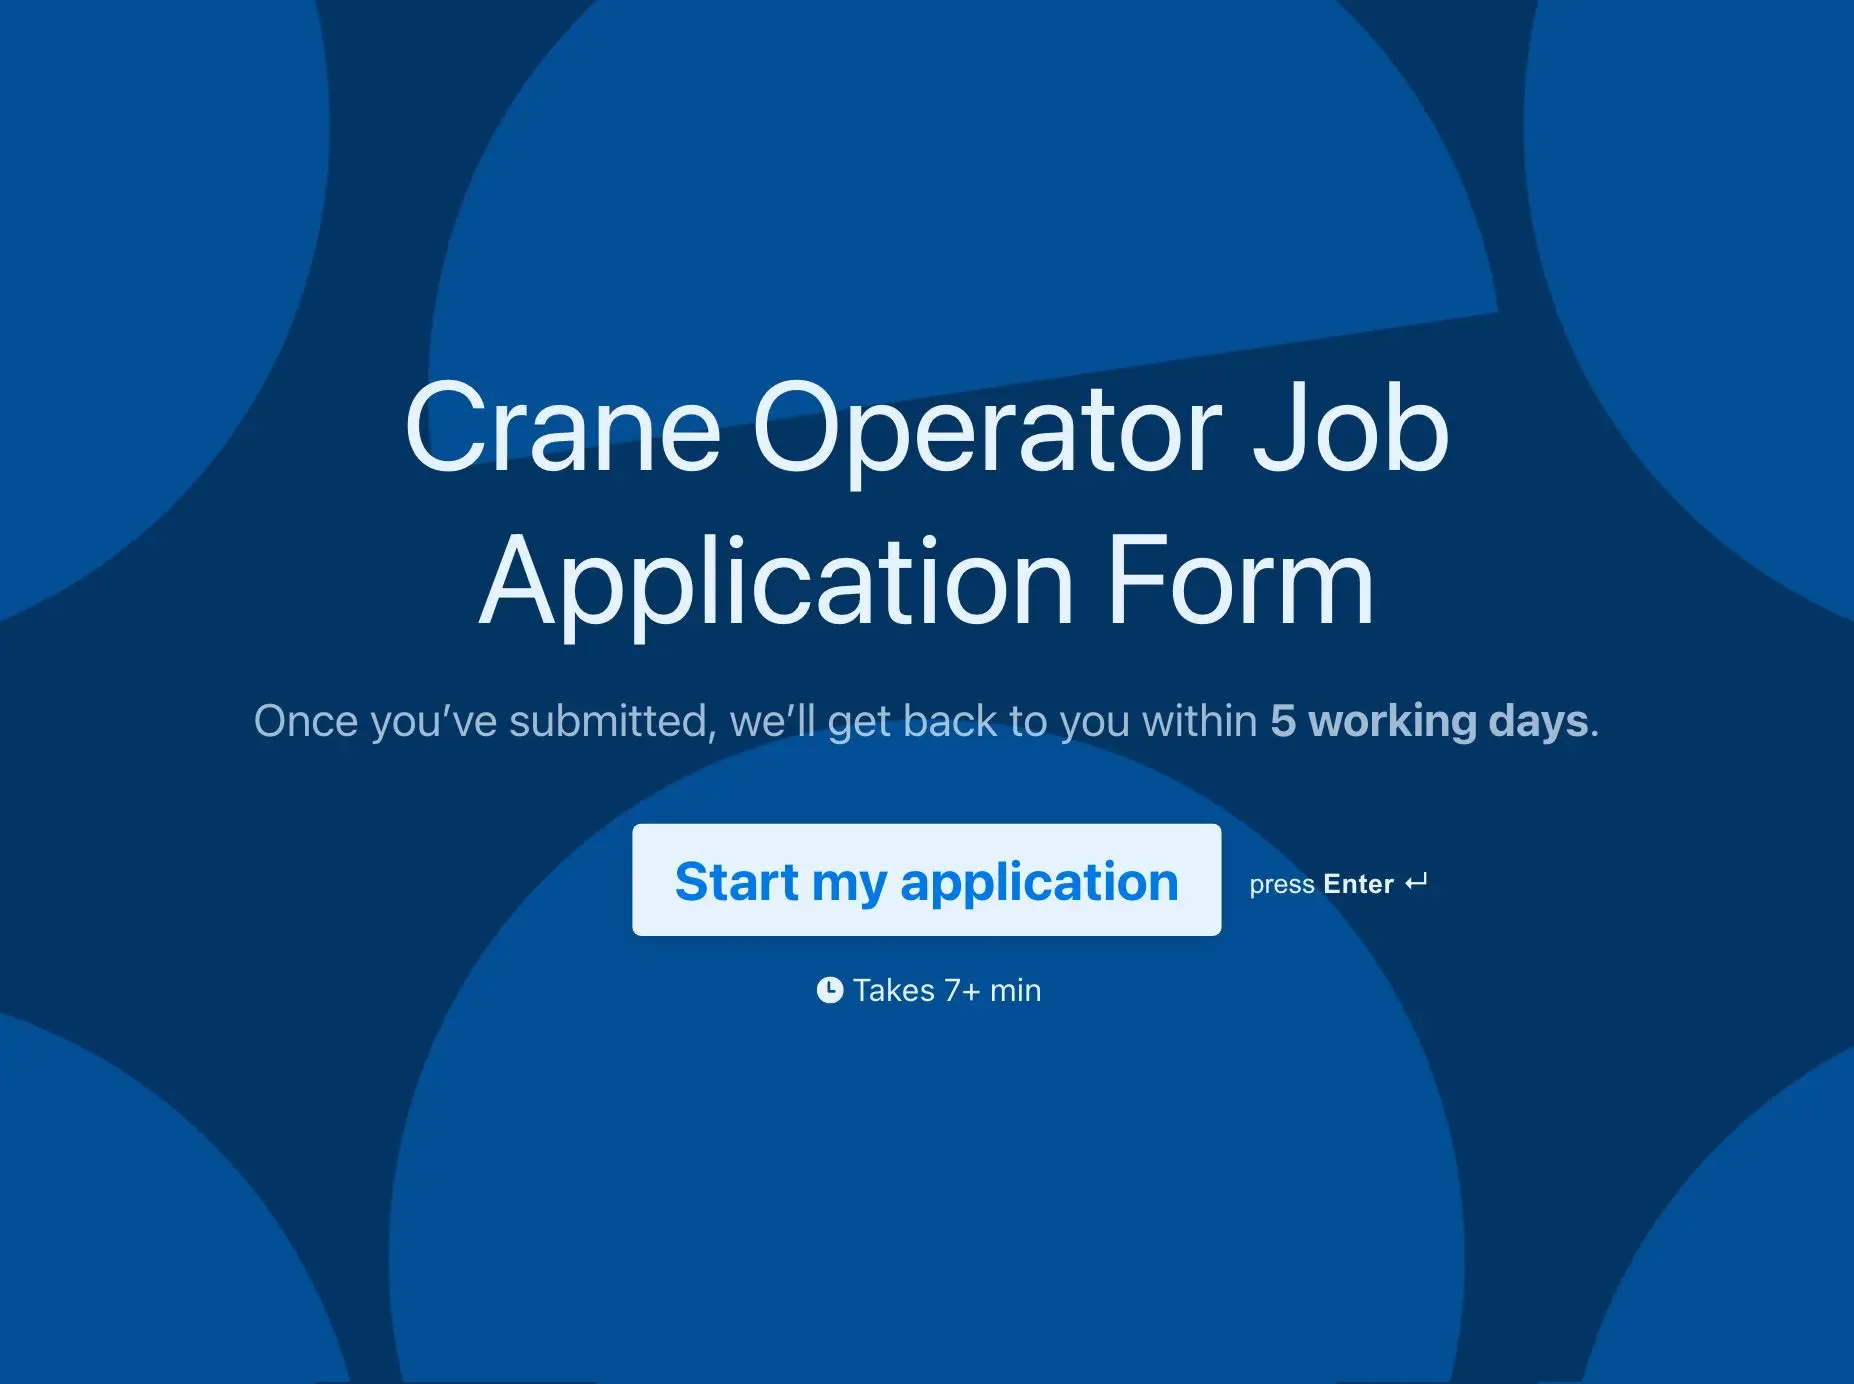 Crane Operator Job Application Form Template Hero